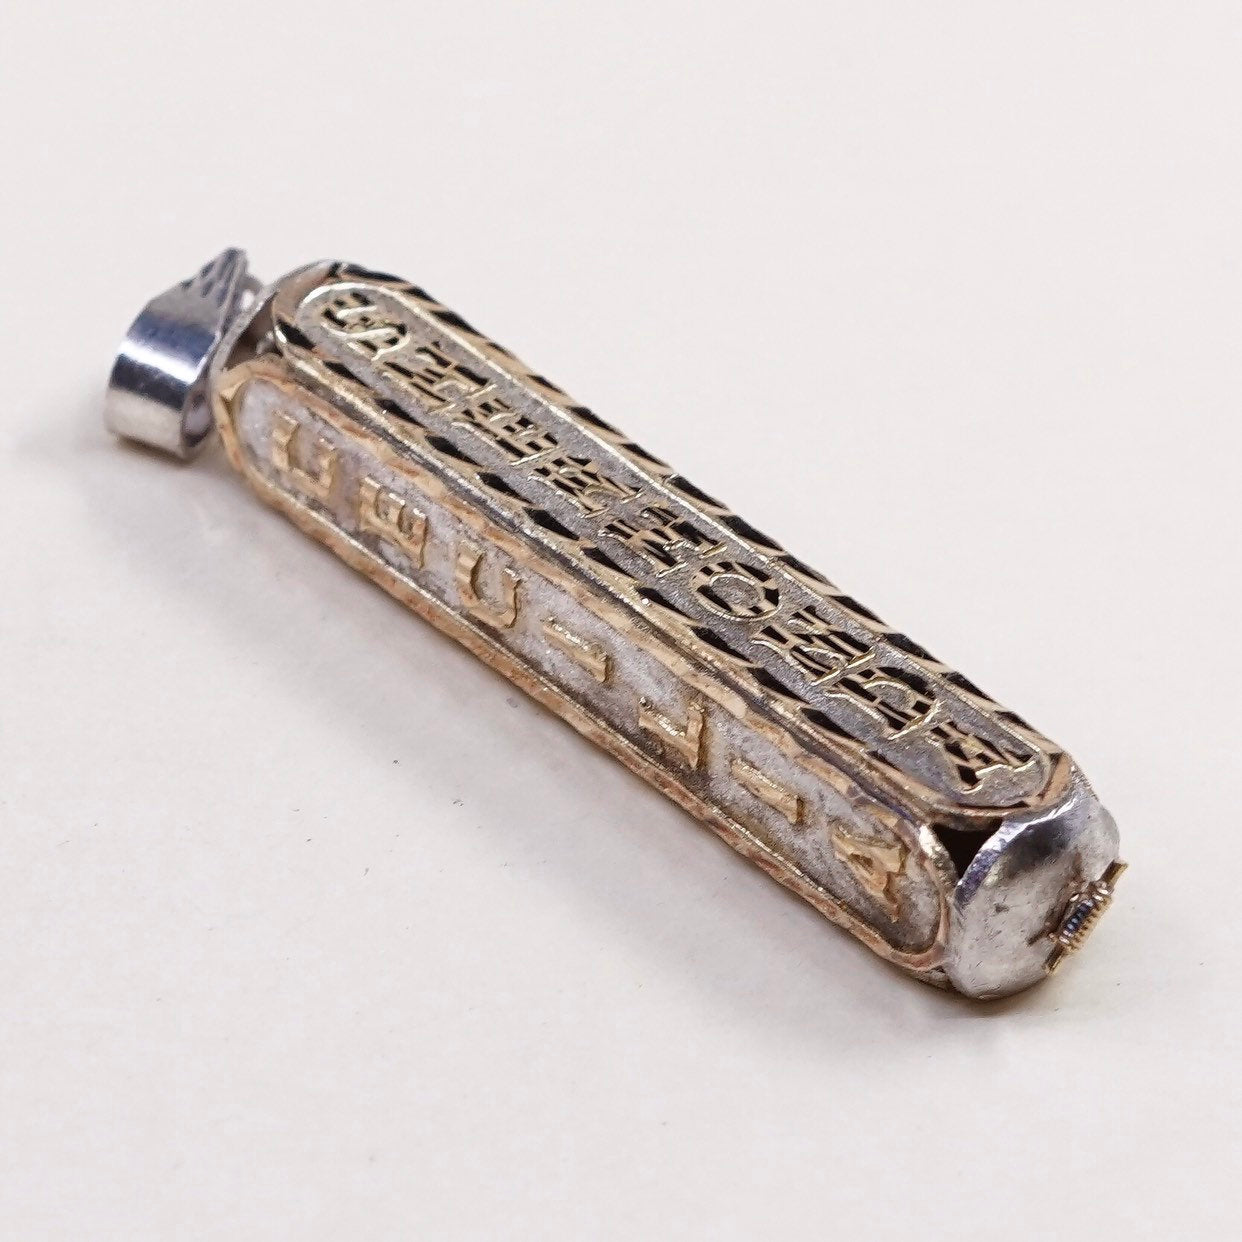 sterling silver w/ 14K handmade pendant, name family bar w/ “Cecilia sherhonda